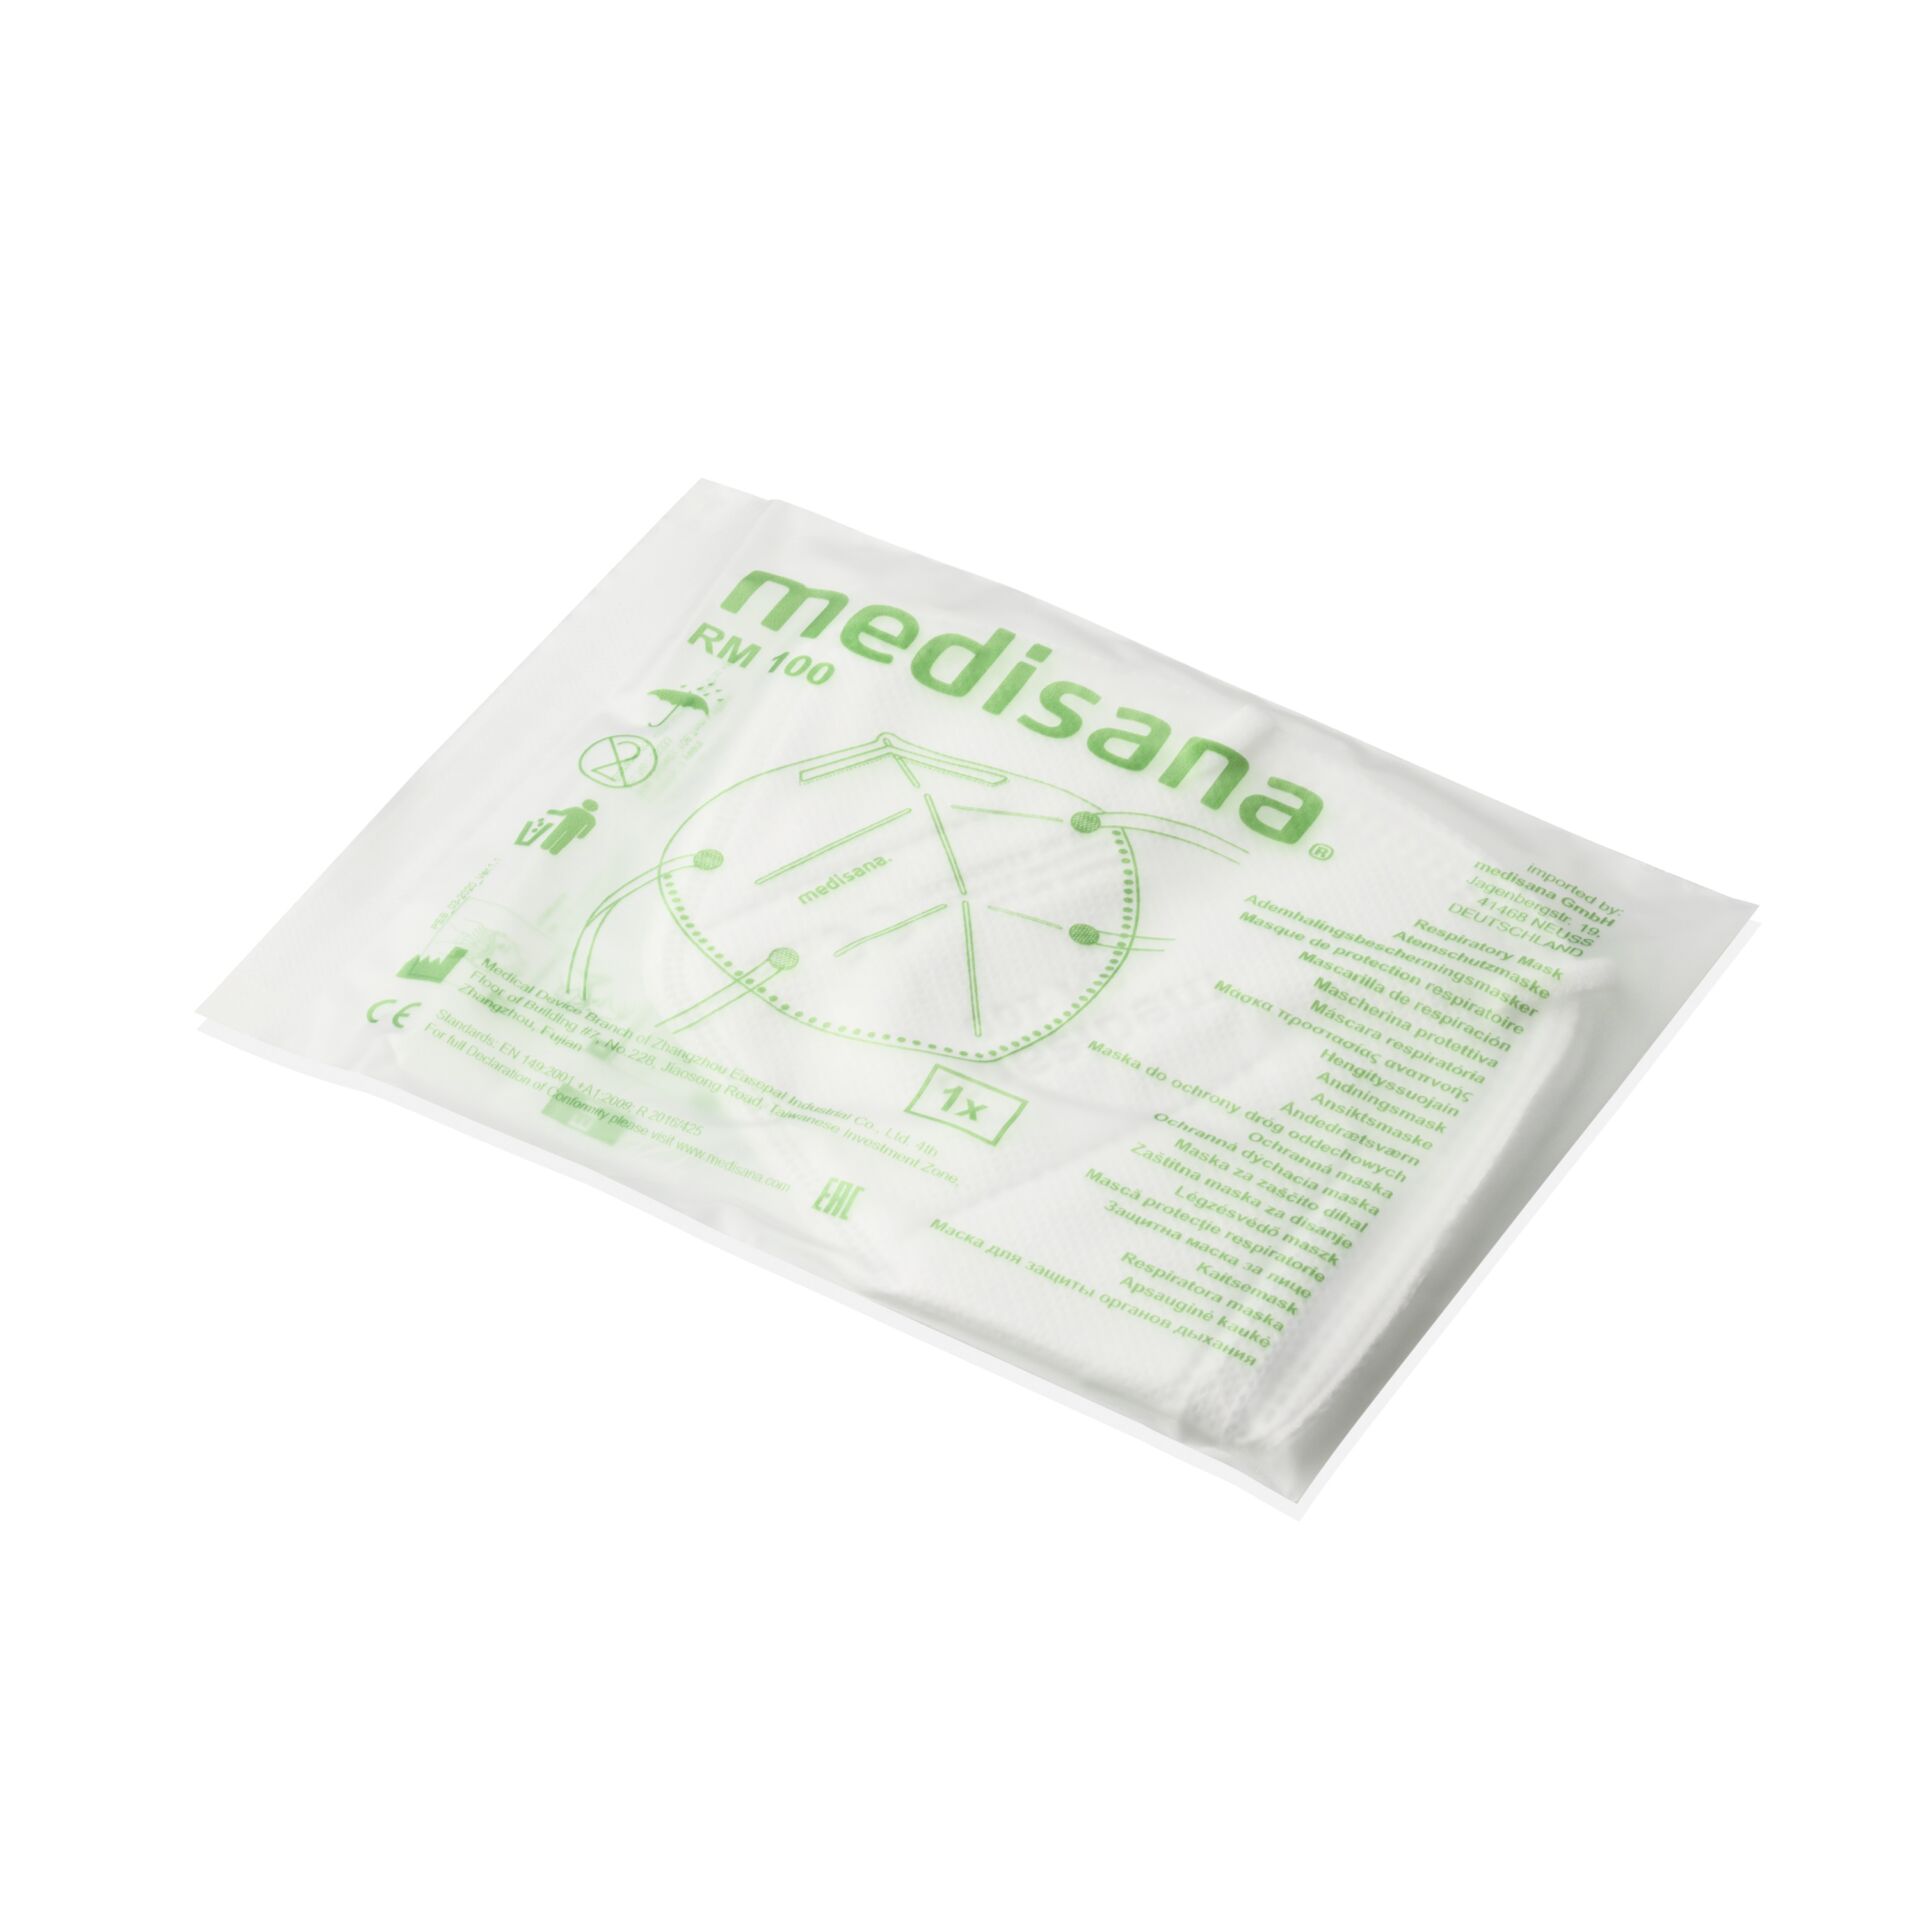 Medisana -RM Hardware/Electronic X 10 Atemschutzmaske FFP2 -Medisana 100